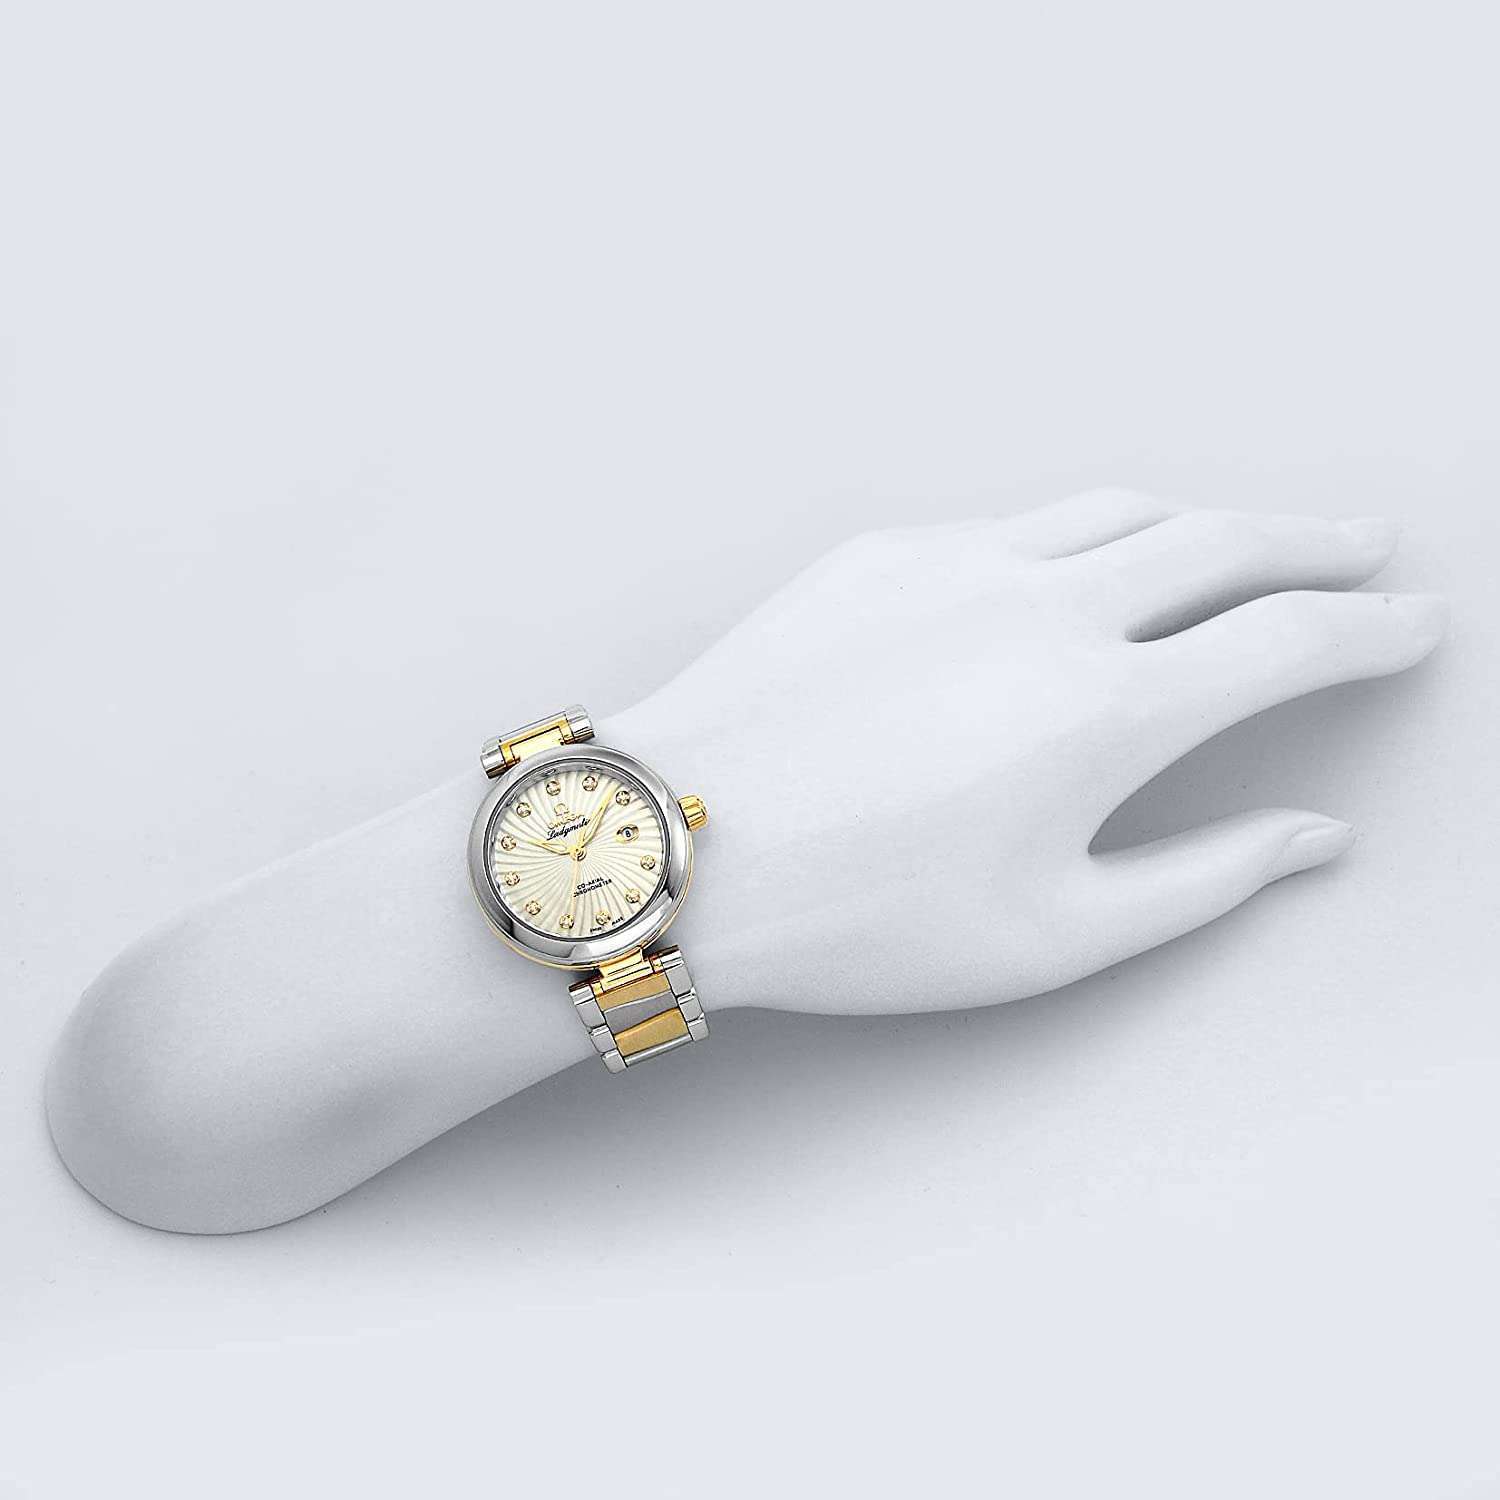 ROOK JAPAN:OMEGA DE VILLE LADYMATIC CO-AXIAL CHRONOMETER 34 MM WOMEN WATCH 425.20.34.20.55.002,Luxury Watch,Omega